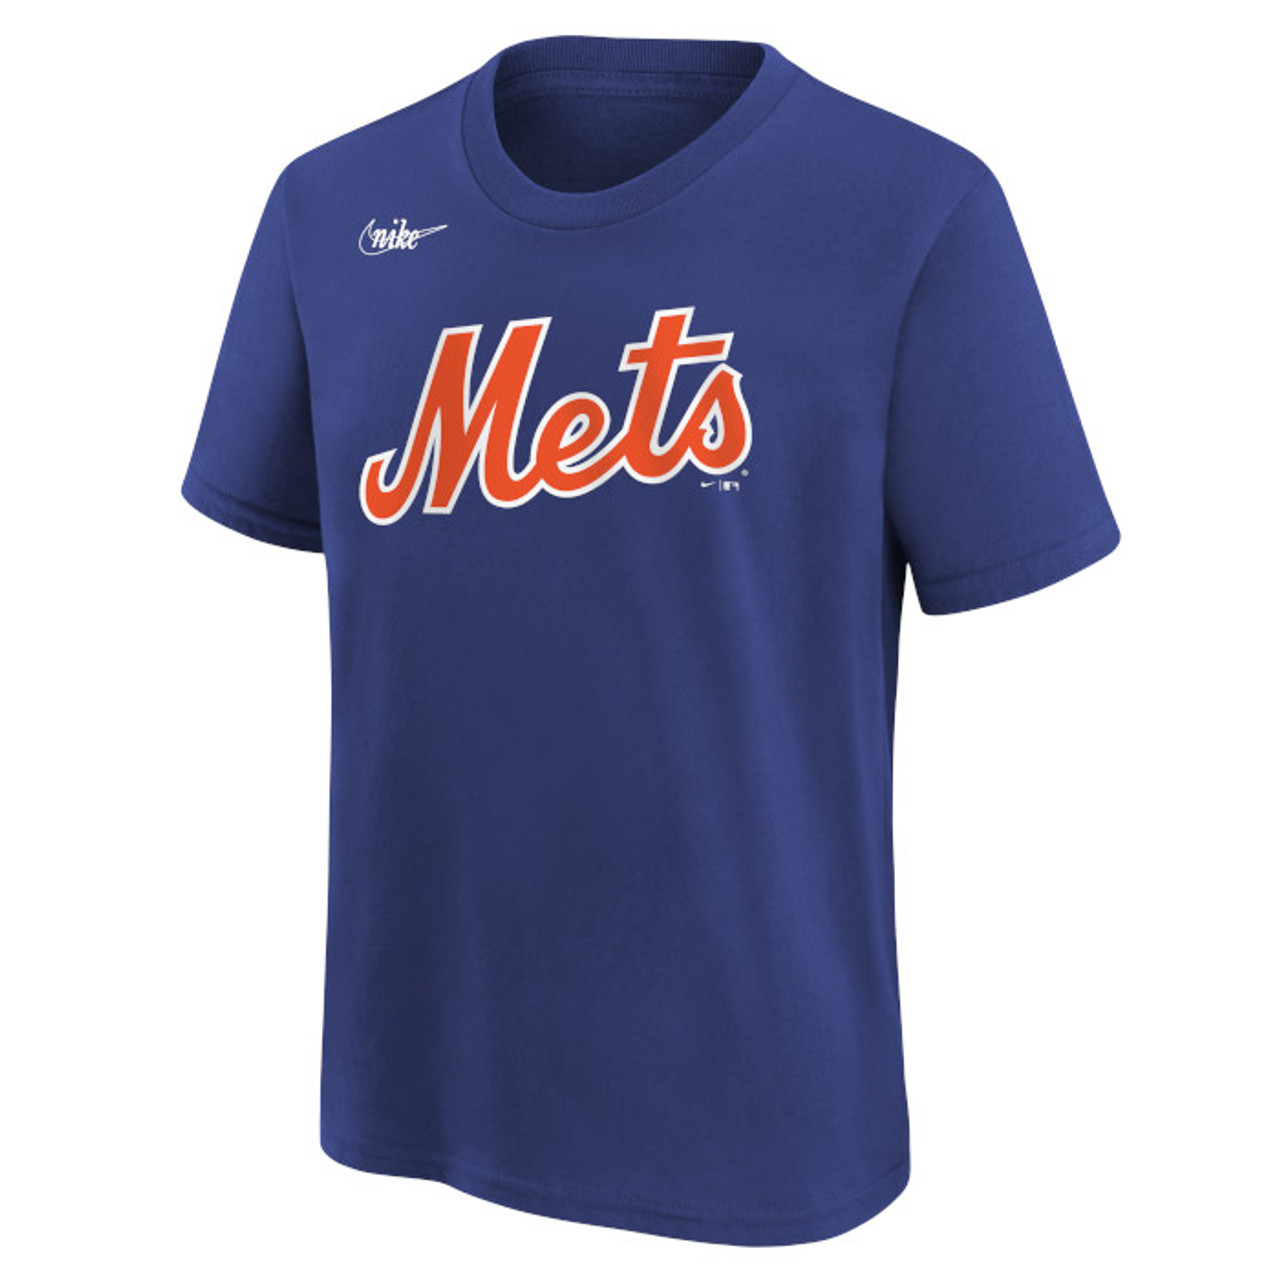 New York Mets Baseball Jersey Majestic Athletics Size 4XL